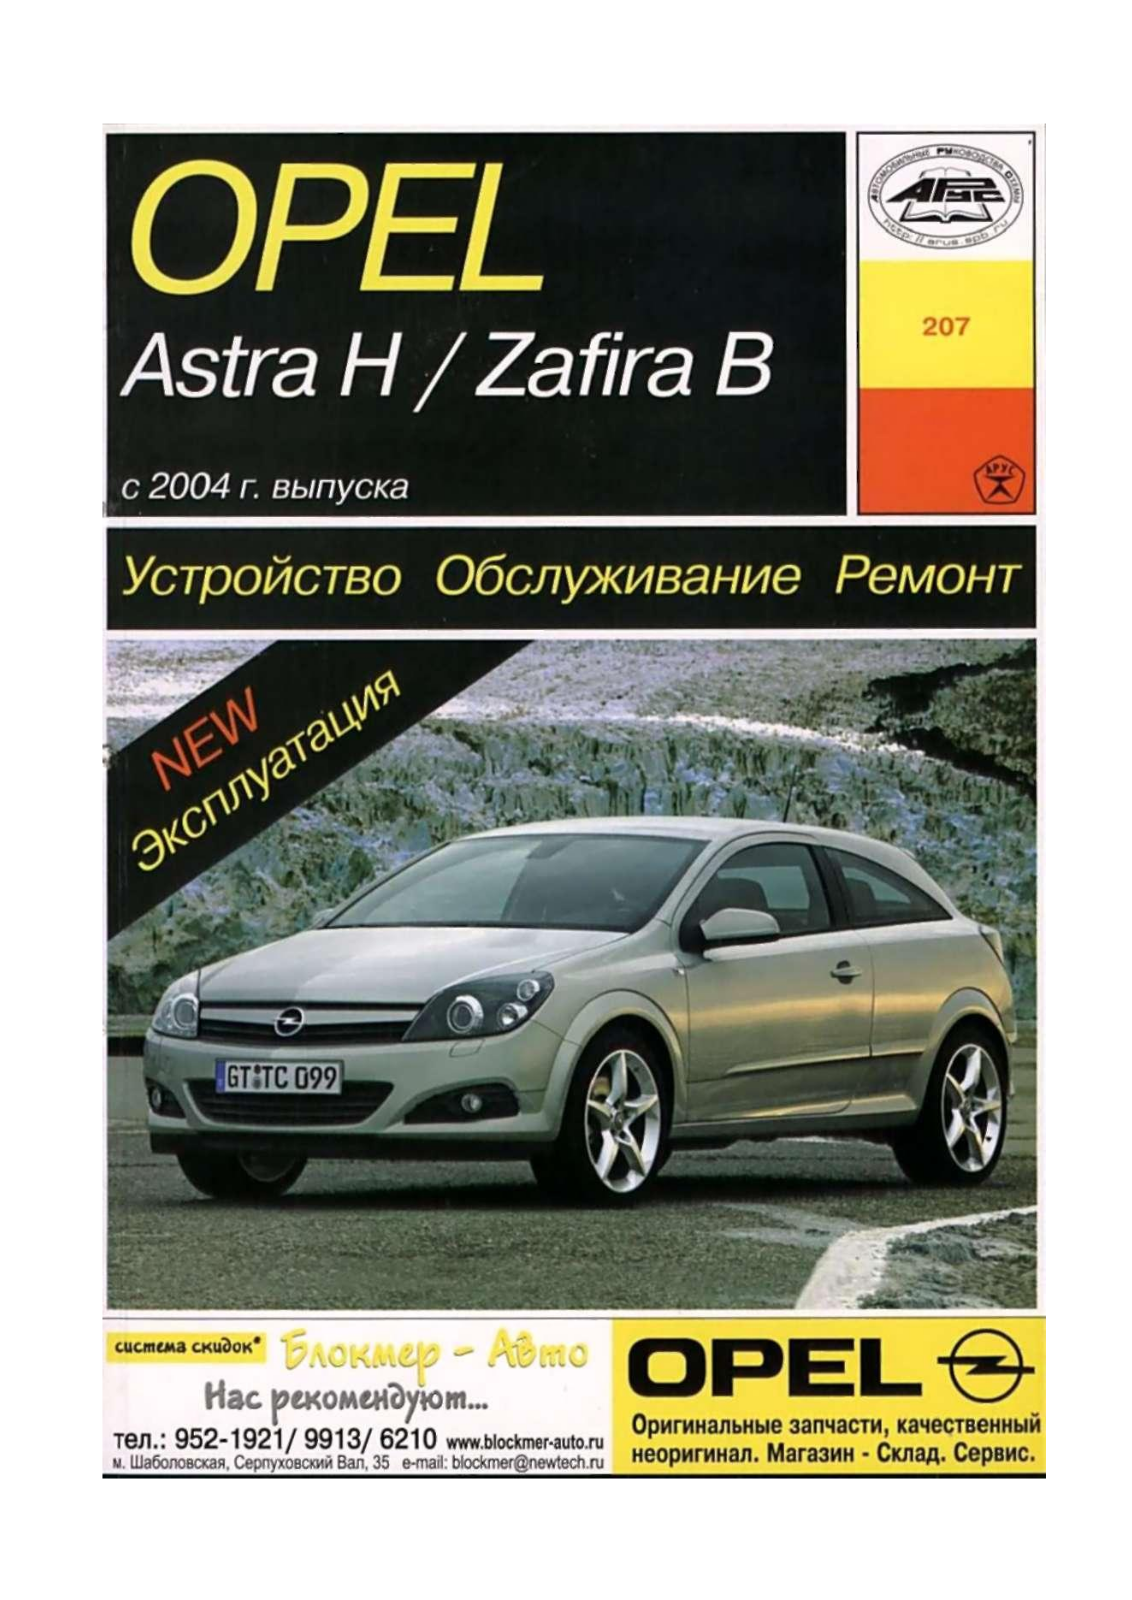 Opel Astra 2004, Zafira 2004 User Manual